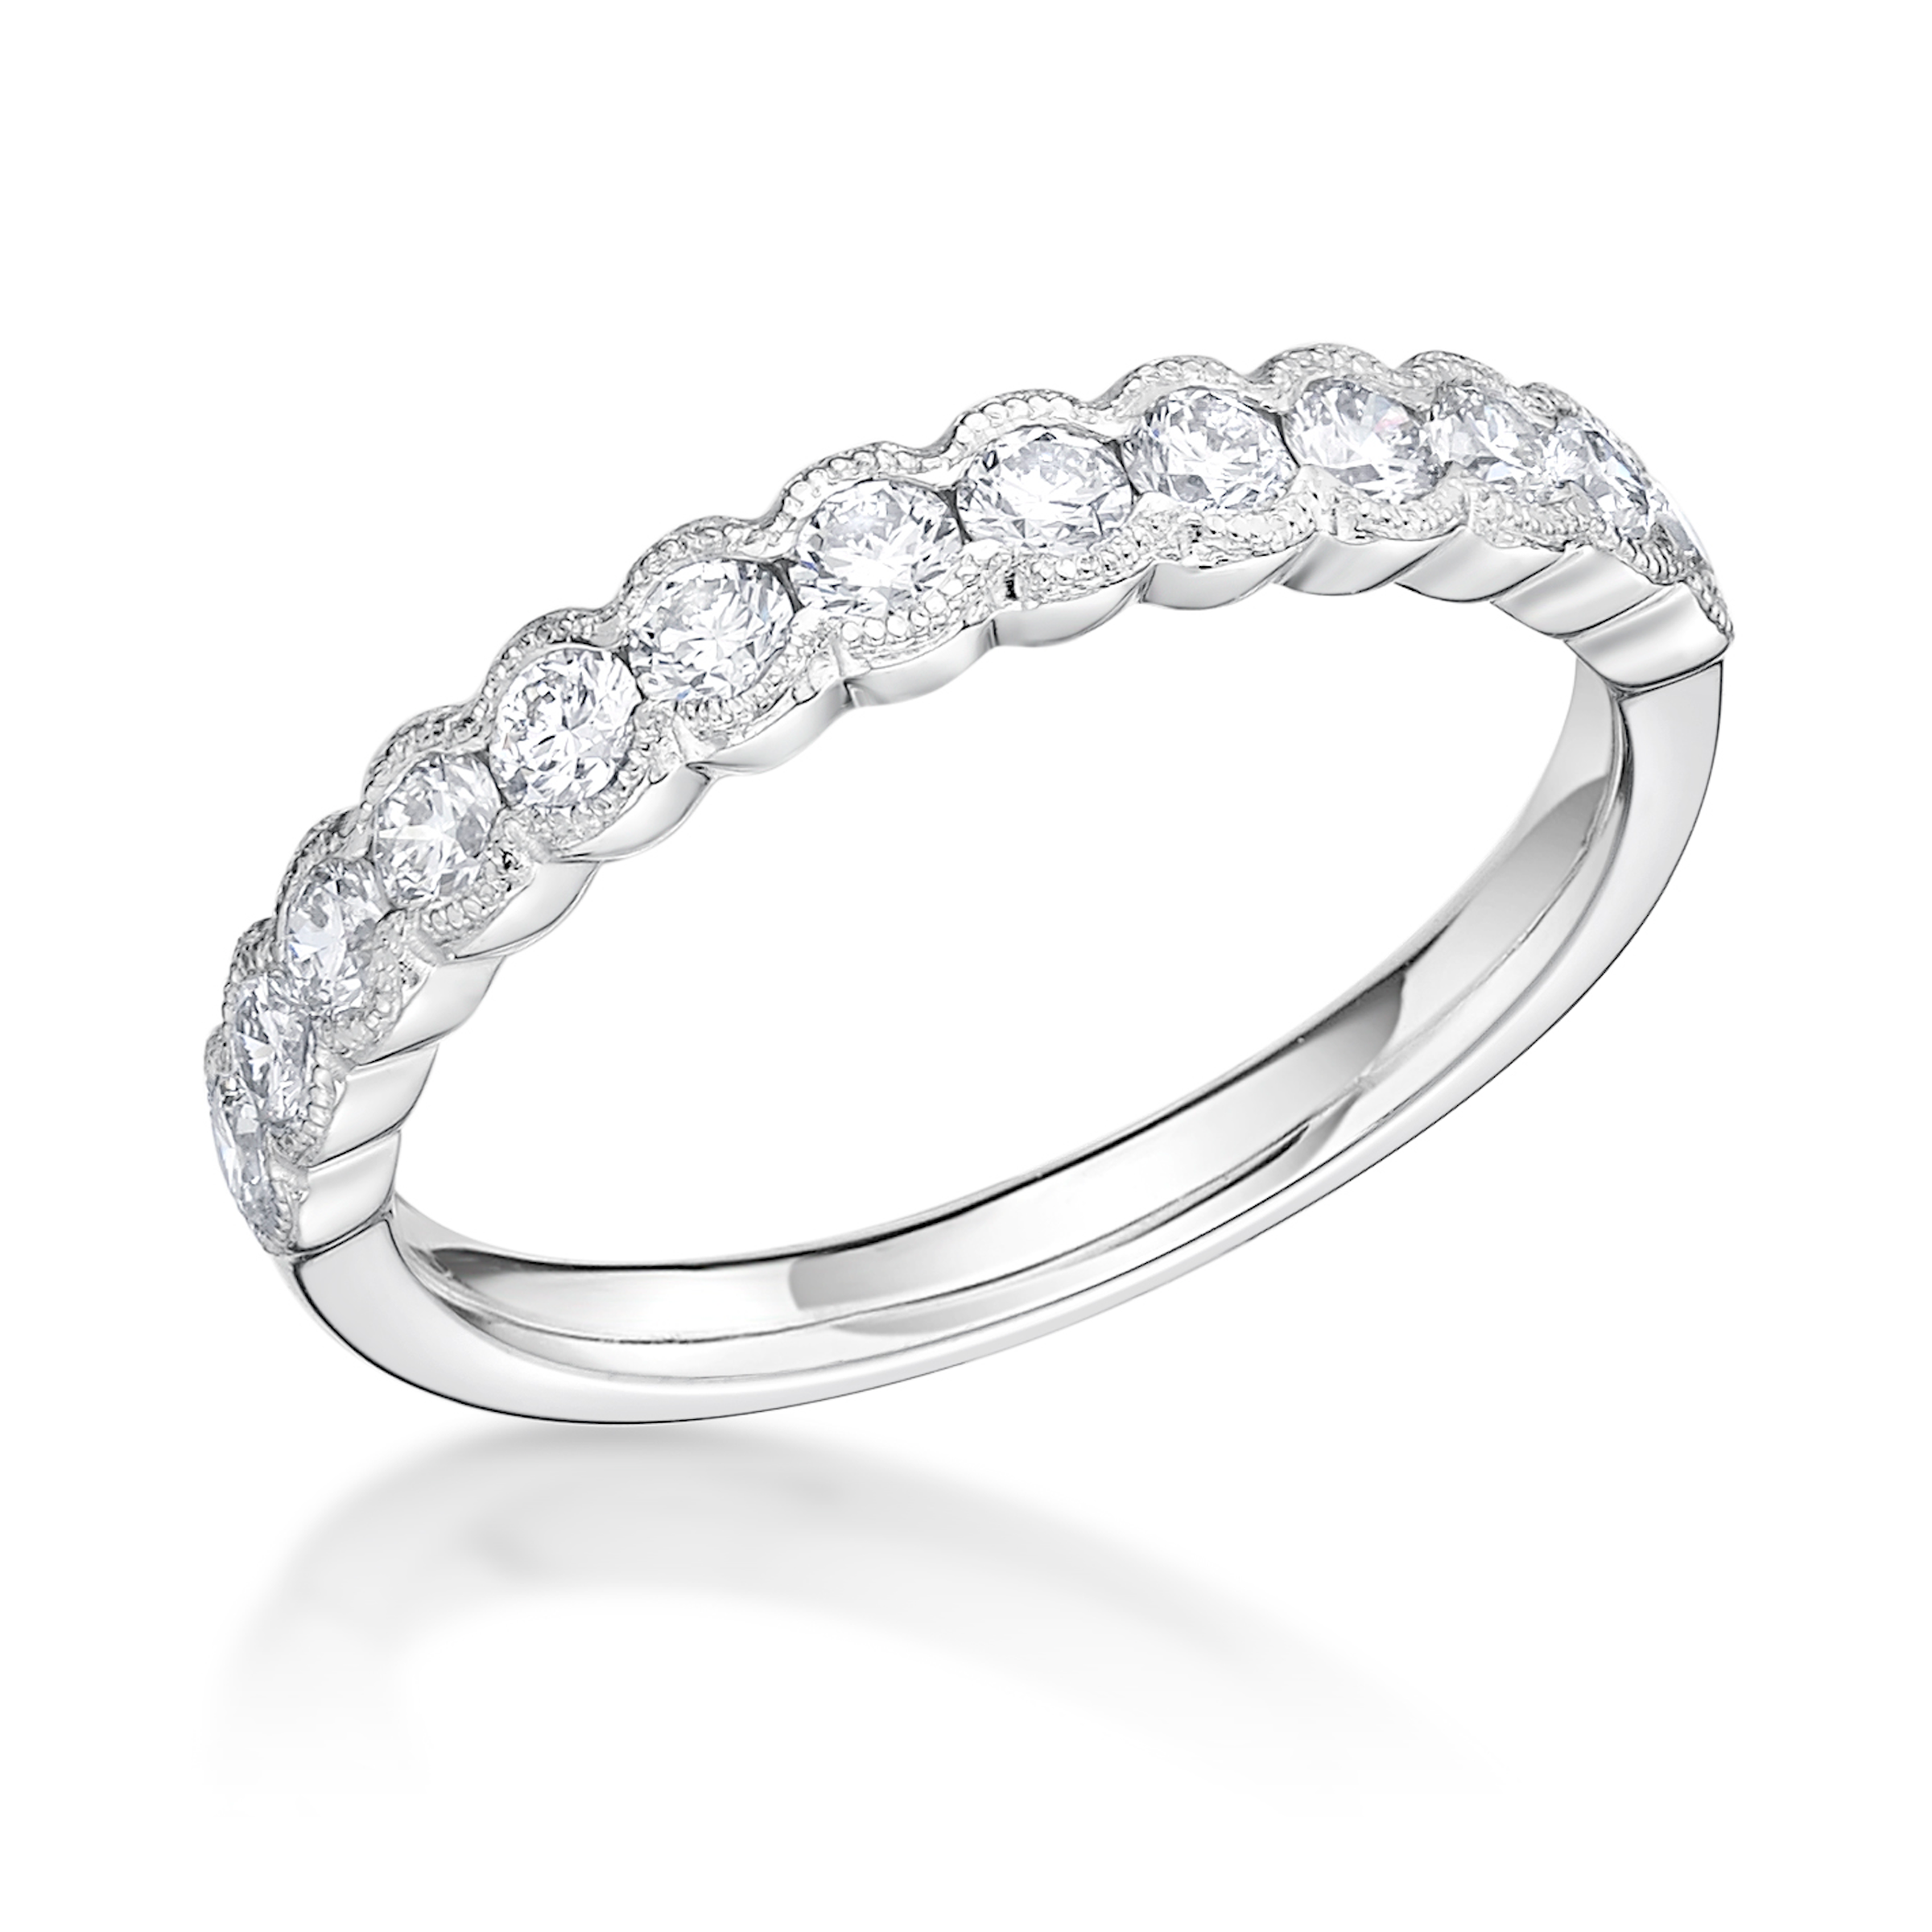 VINTAGE INSPIRED ROUND BRILLIANT CUT DIAMOND SET WEDDING ETERNITY RING